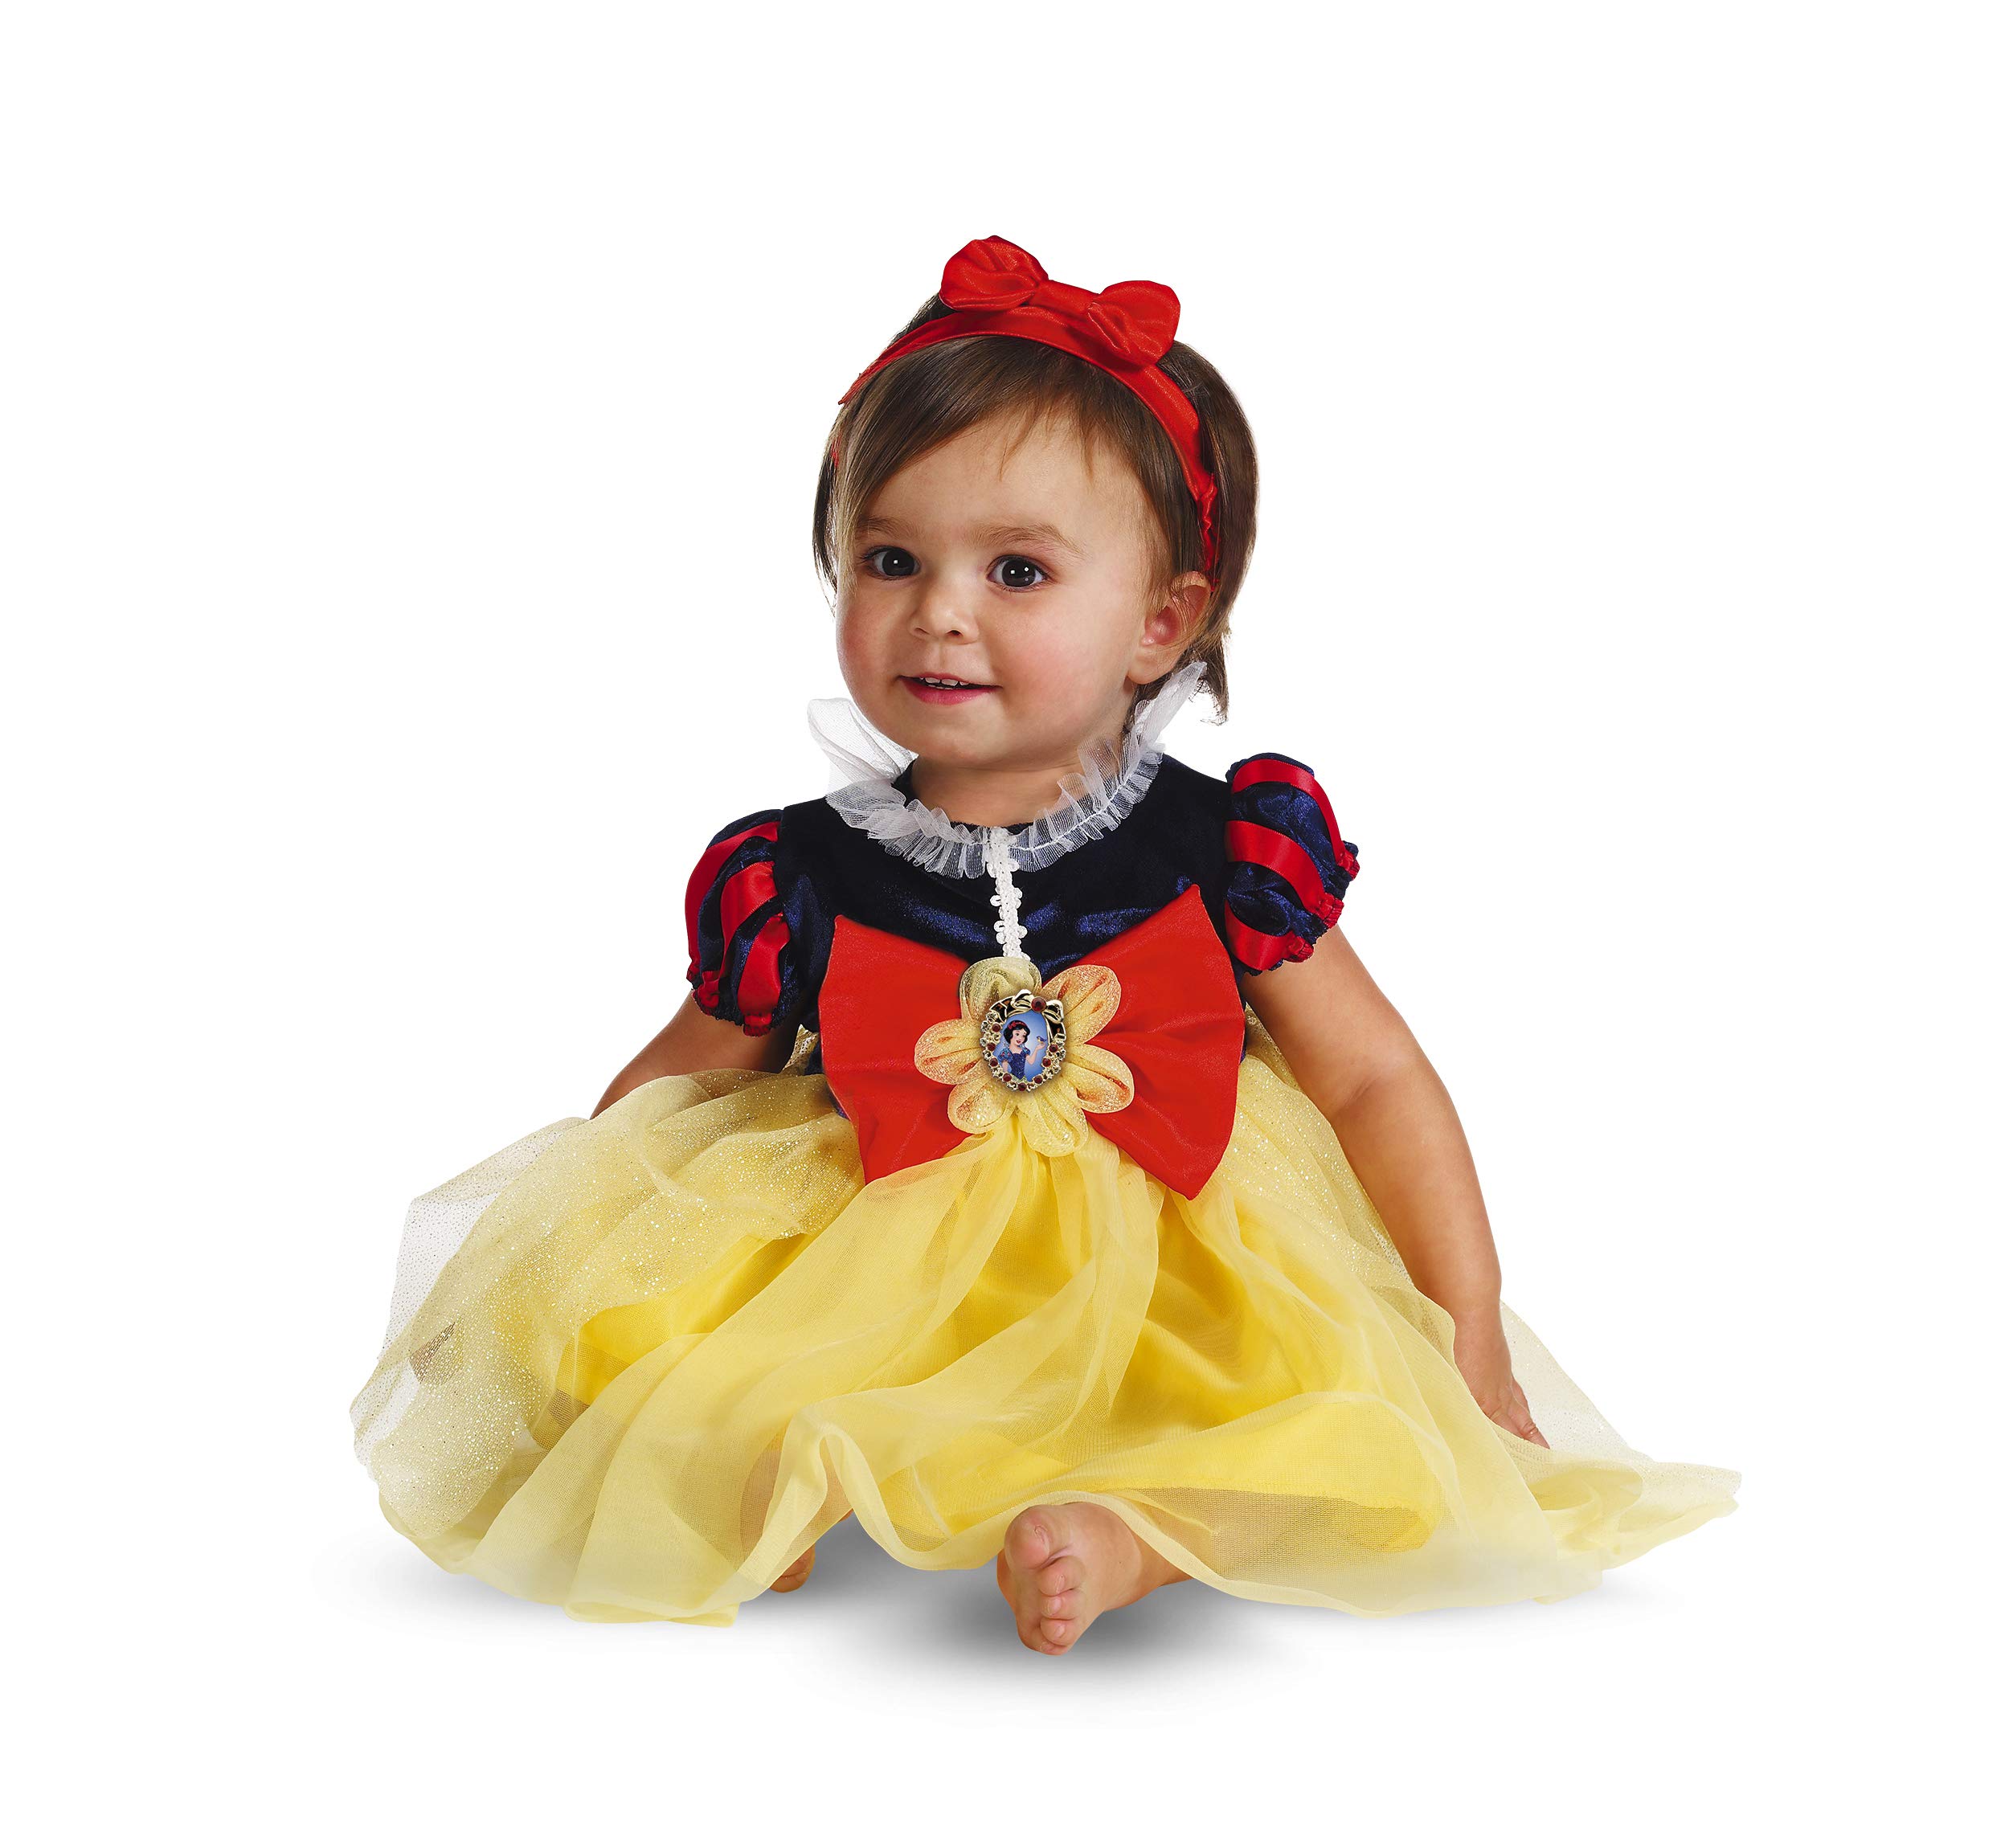 Disney Baby-Girls My First Disney Snow White Costume, Red/Blue/Yellow, 6-12 Months